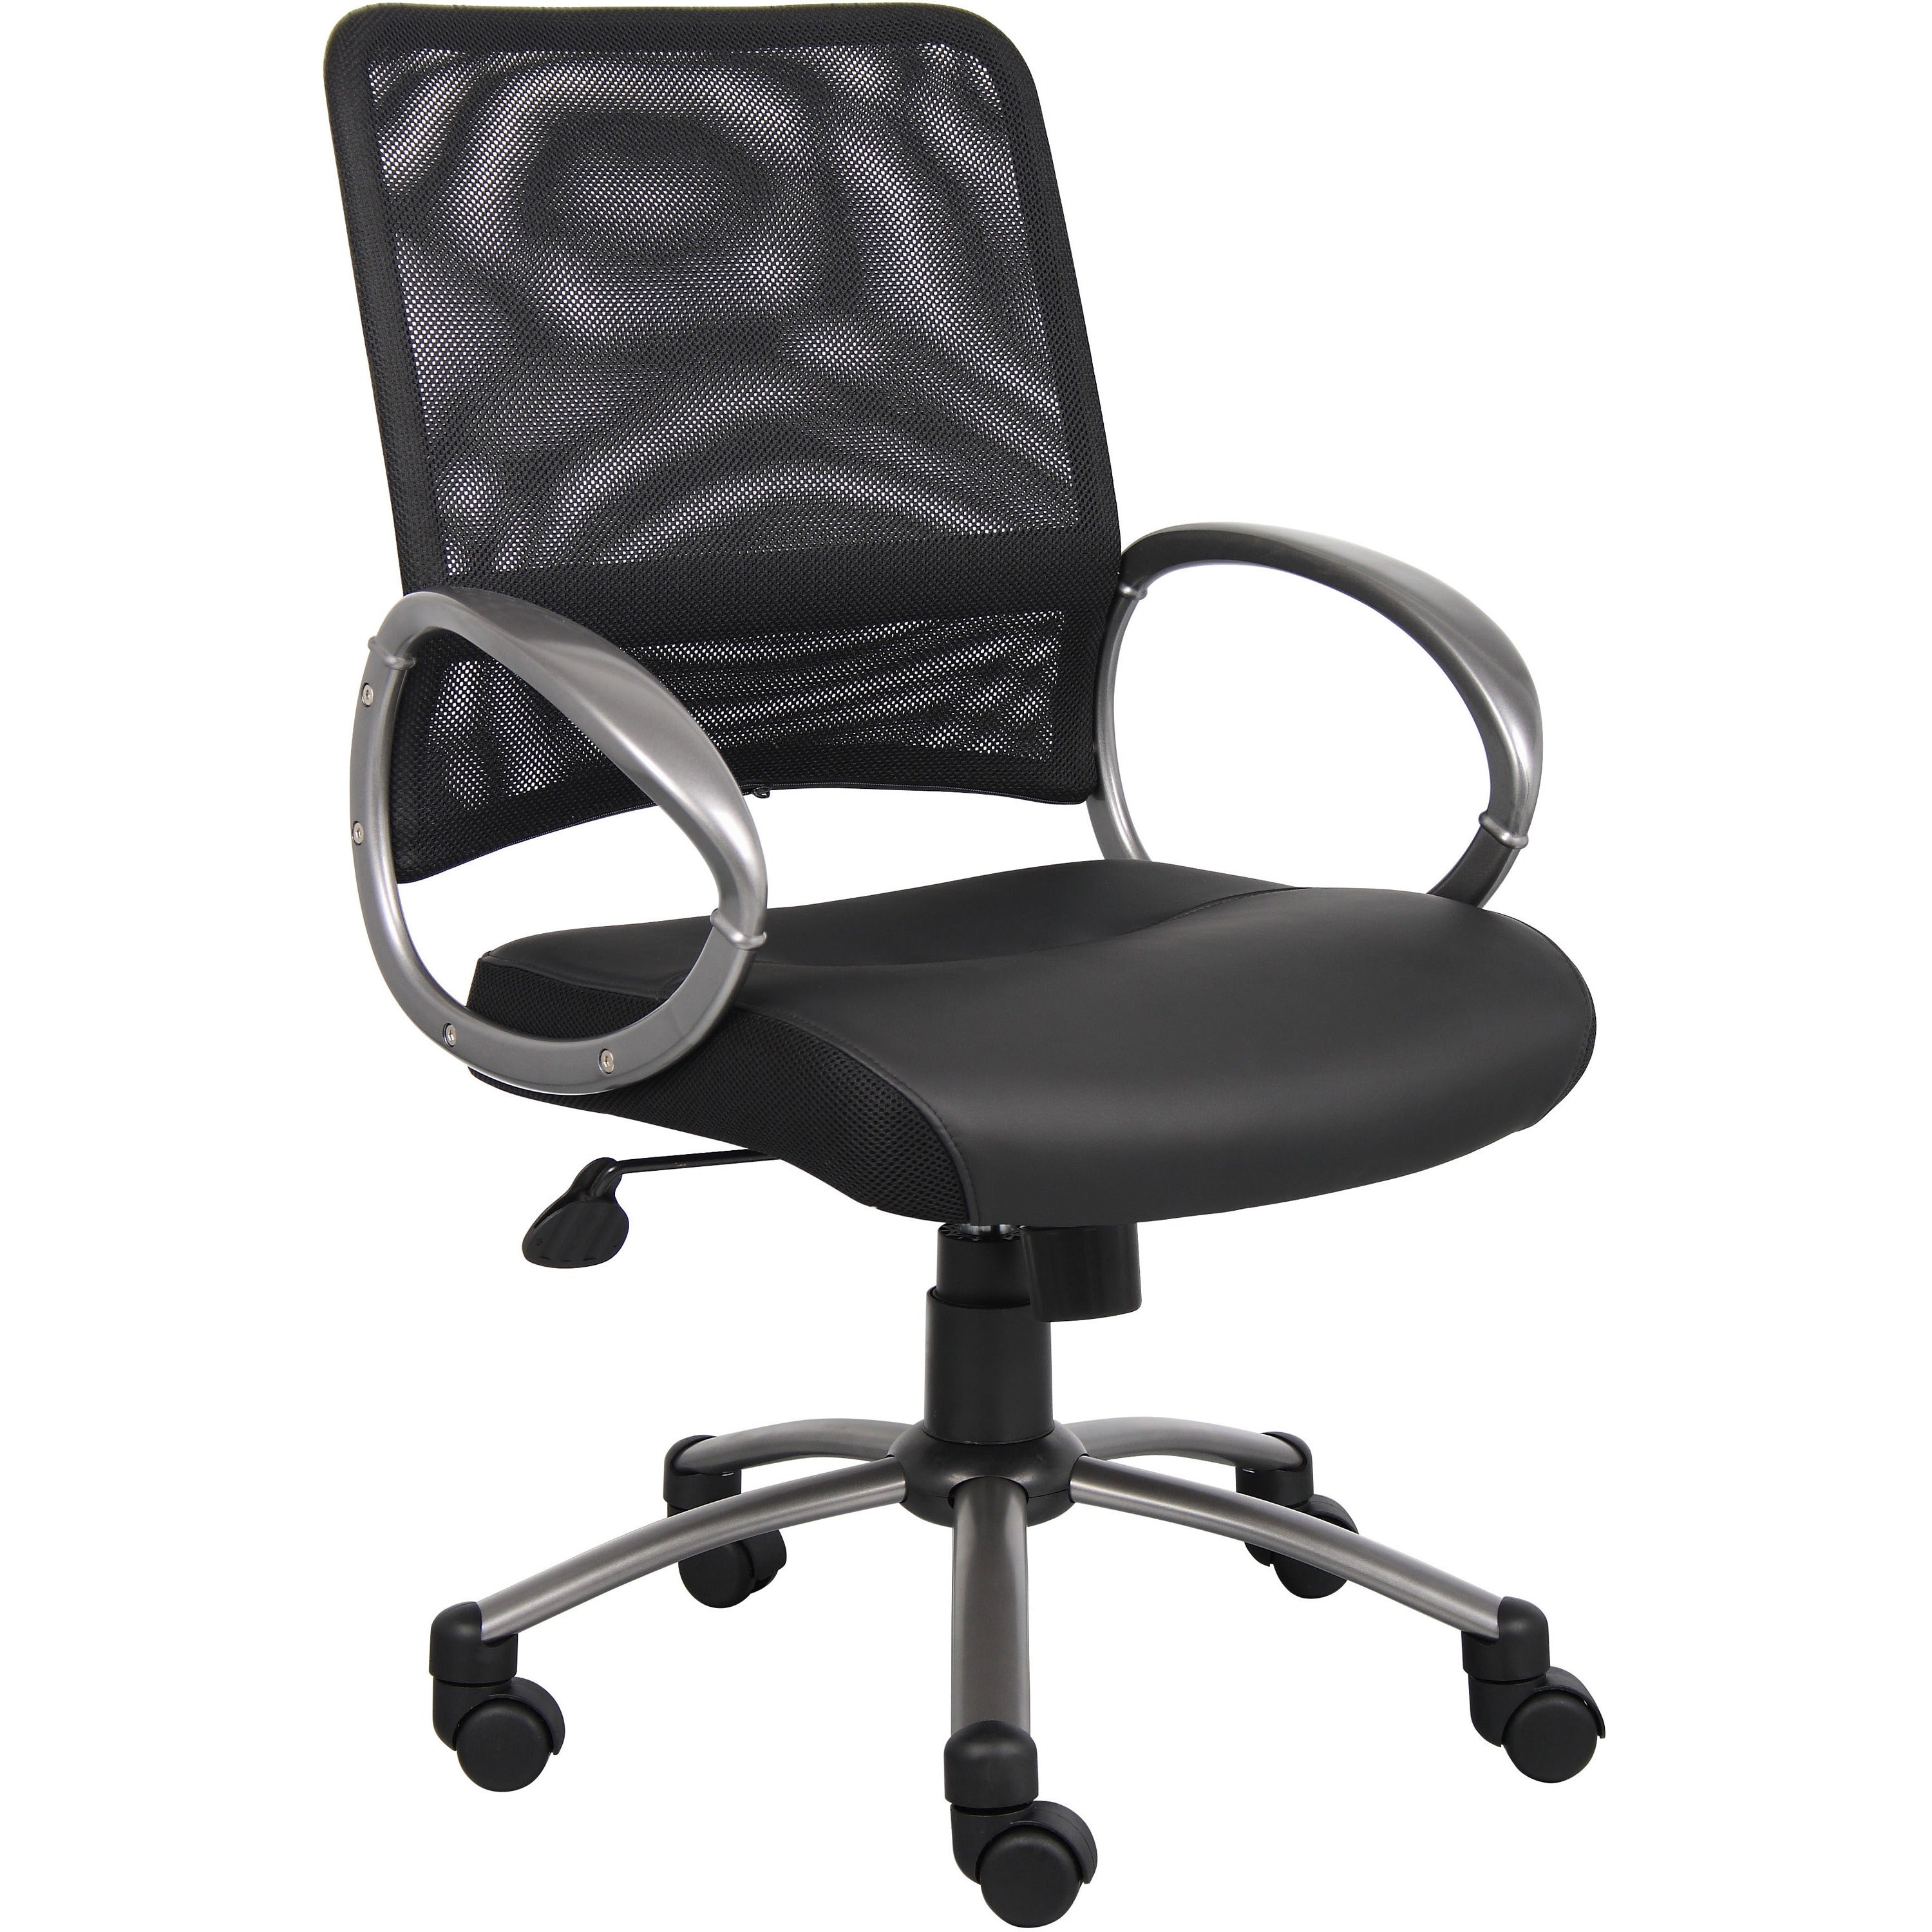 Lorell Mesh Mid-Back Task Chair - Black Leather Seat - 5-star Base - Black - 1 Each - 